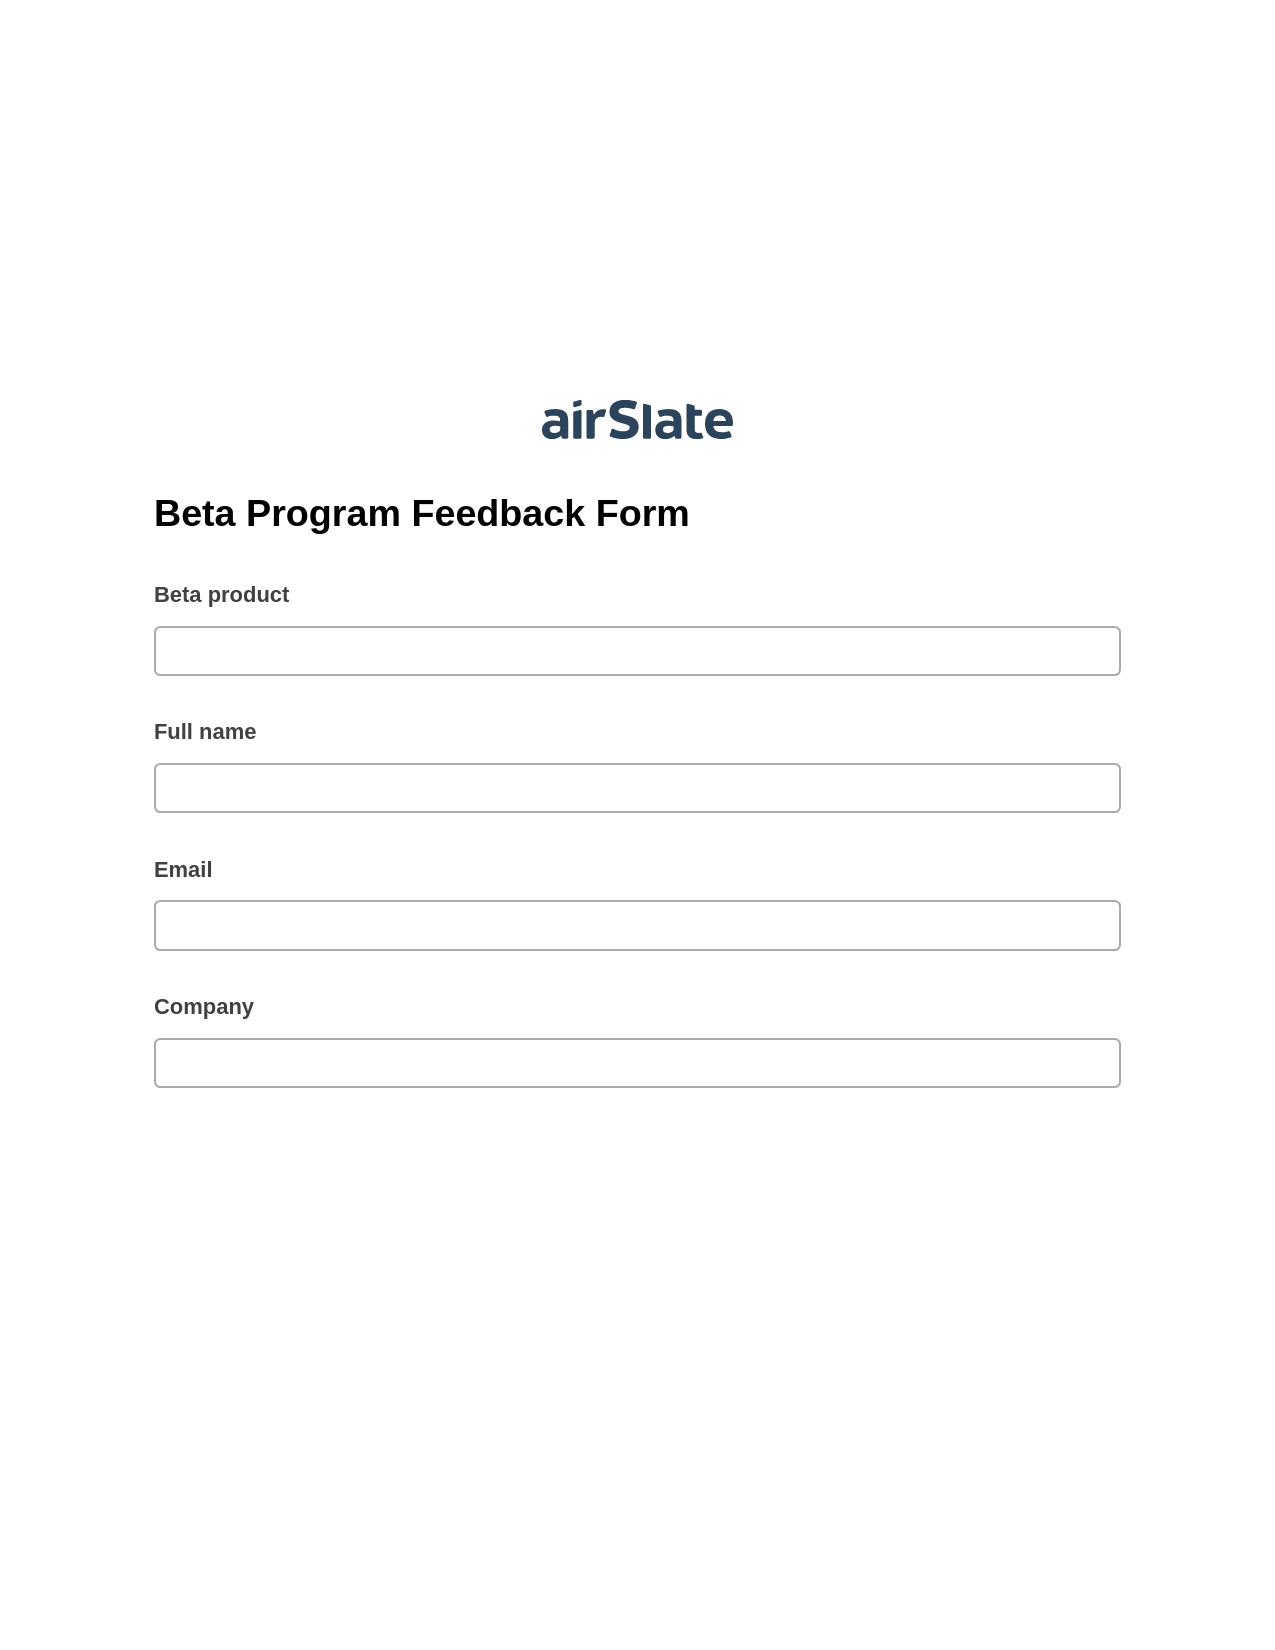 Multirole Beta Program Feedback Form Pre-fill from Google Sheets Bot, Remove Slate Bot, Google Drive Bot